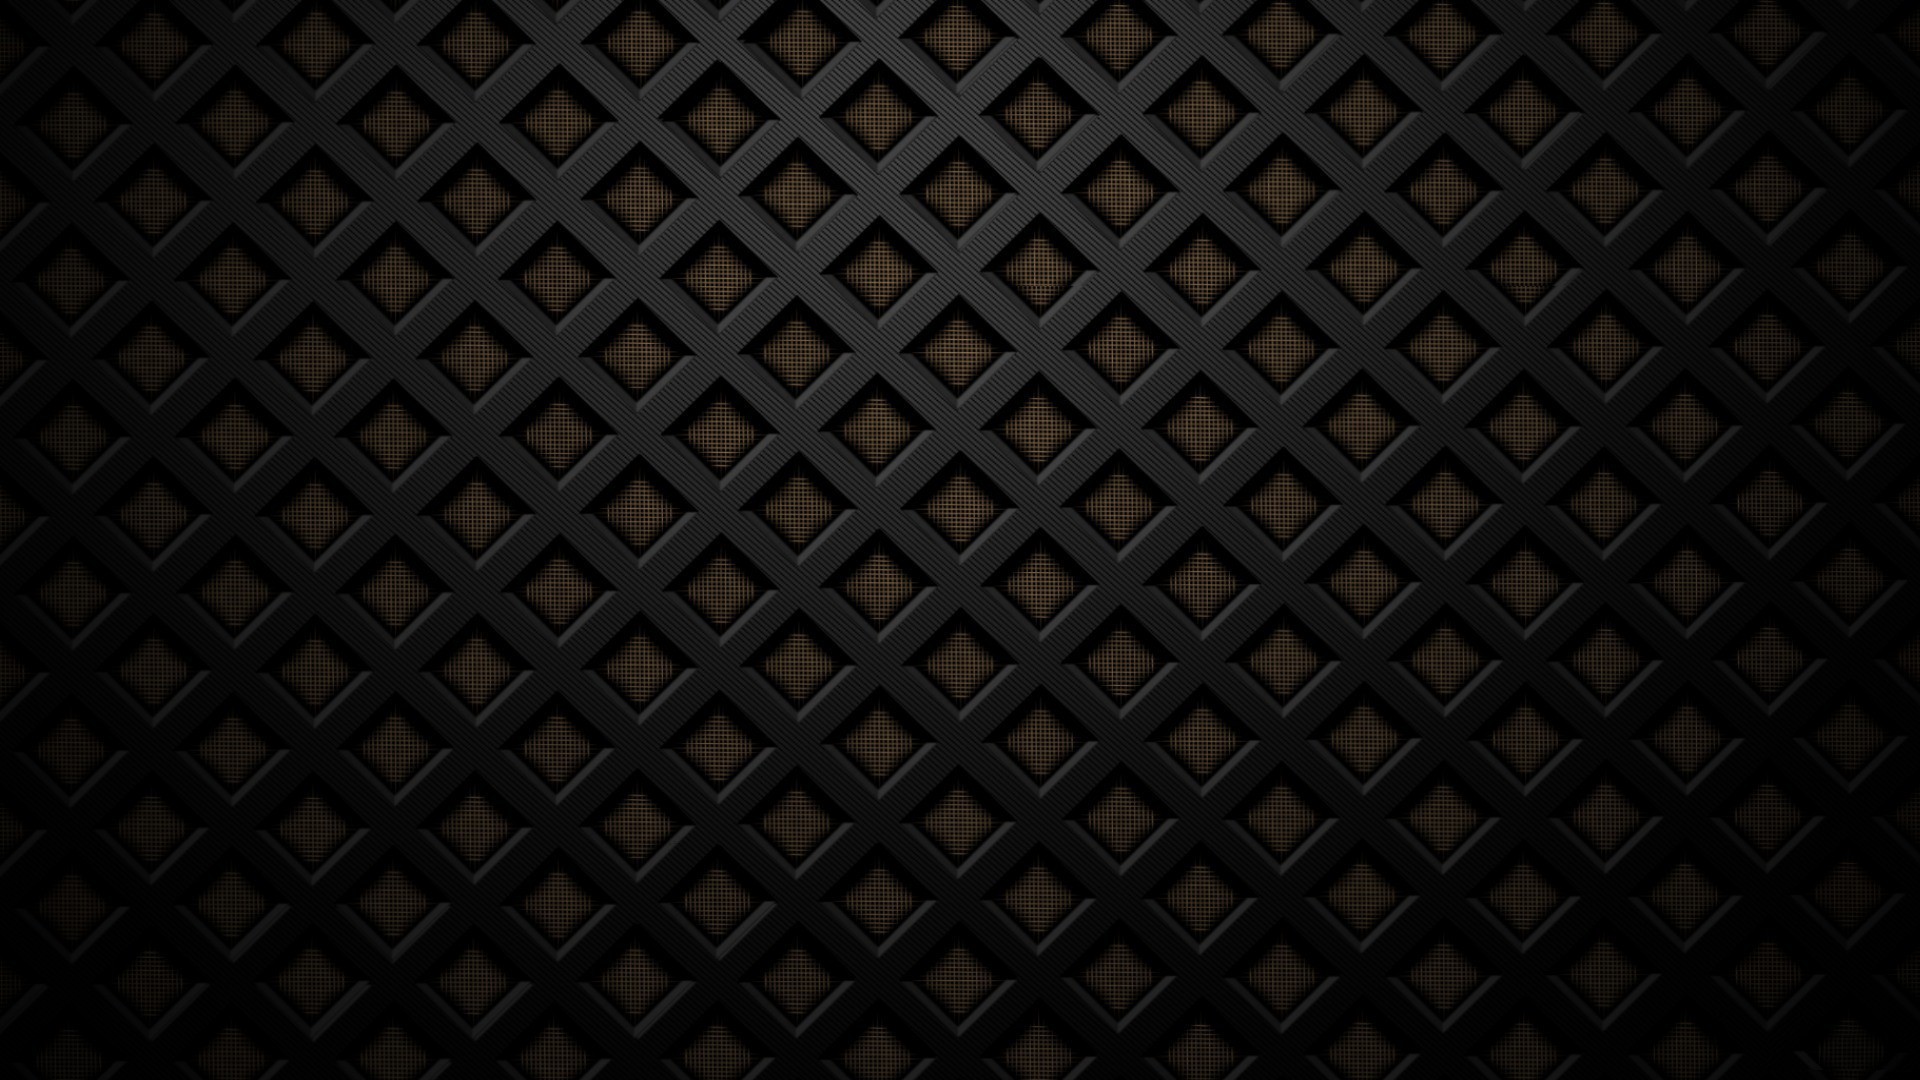 1920x1080 ... wallpapers hd Dark Abstract Wallpaper For Desktop #7041916 ...